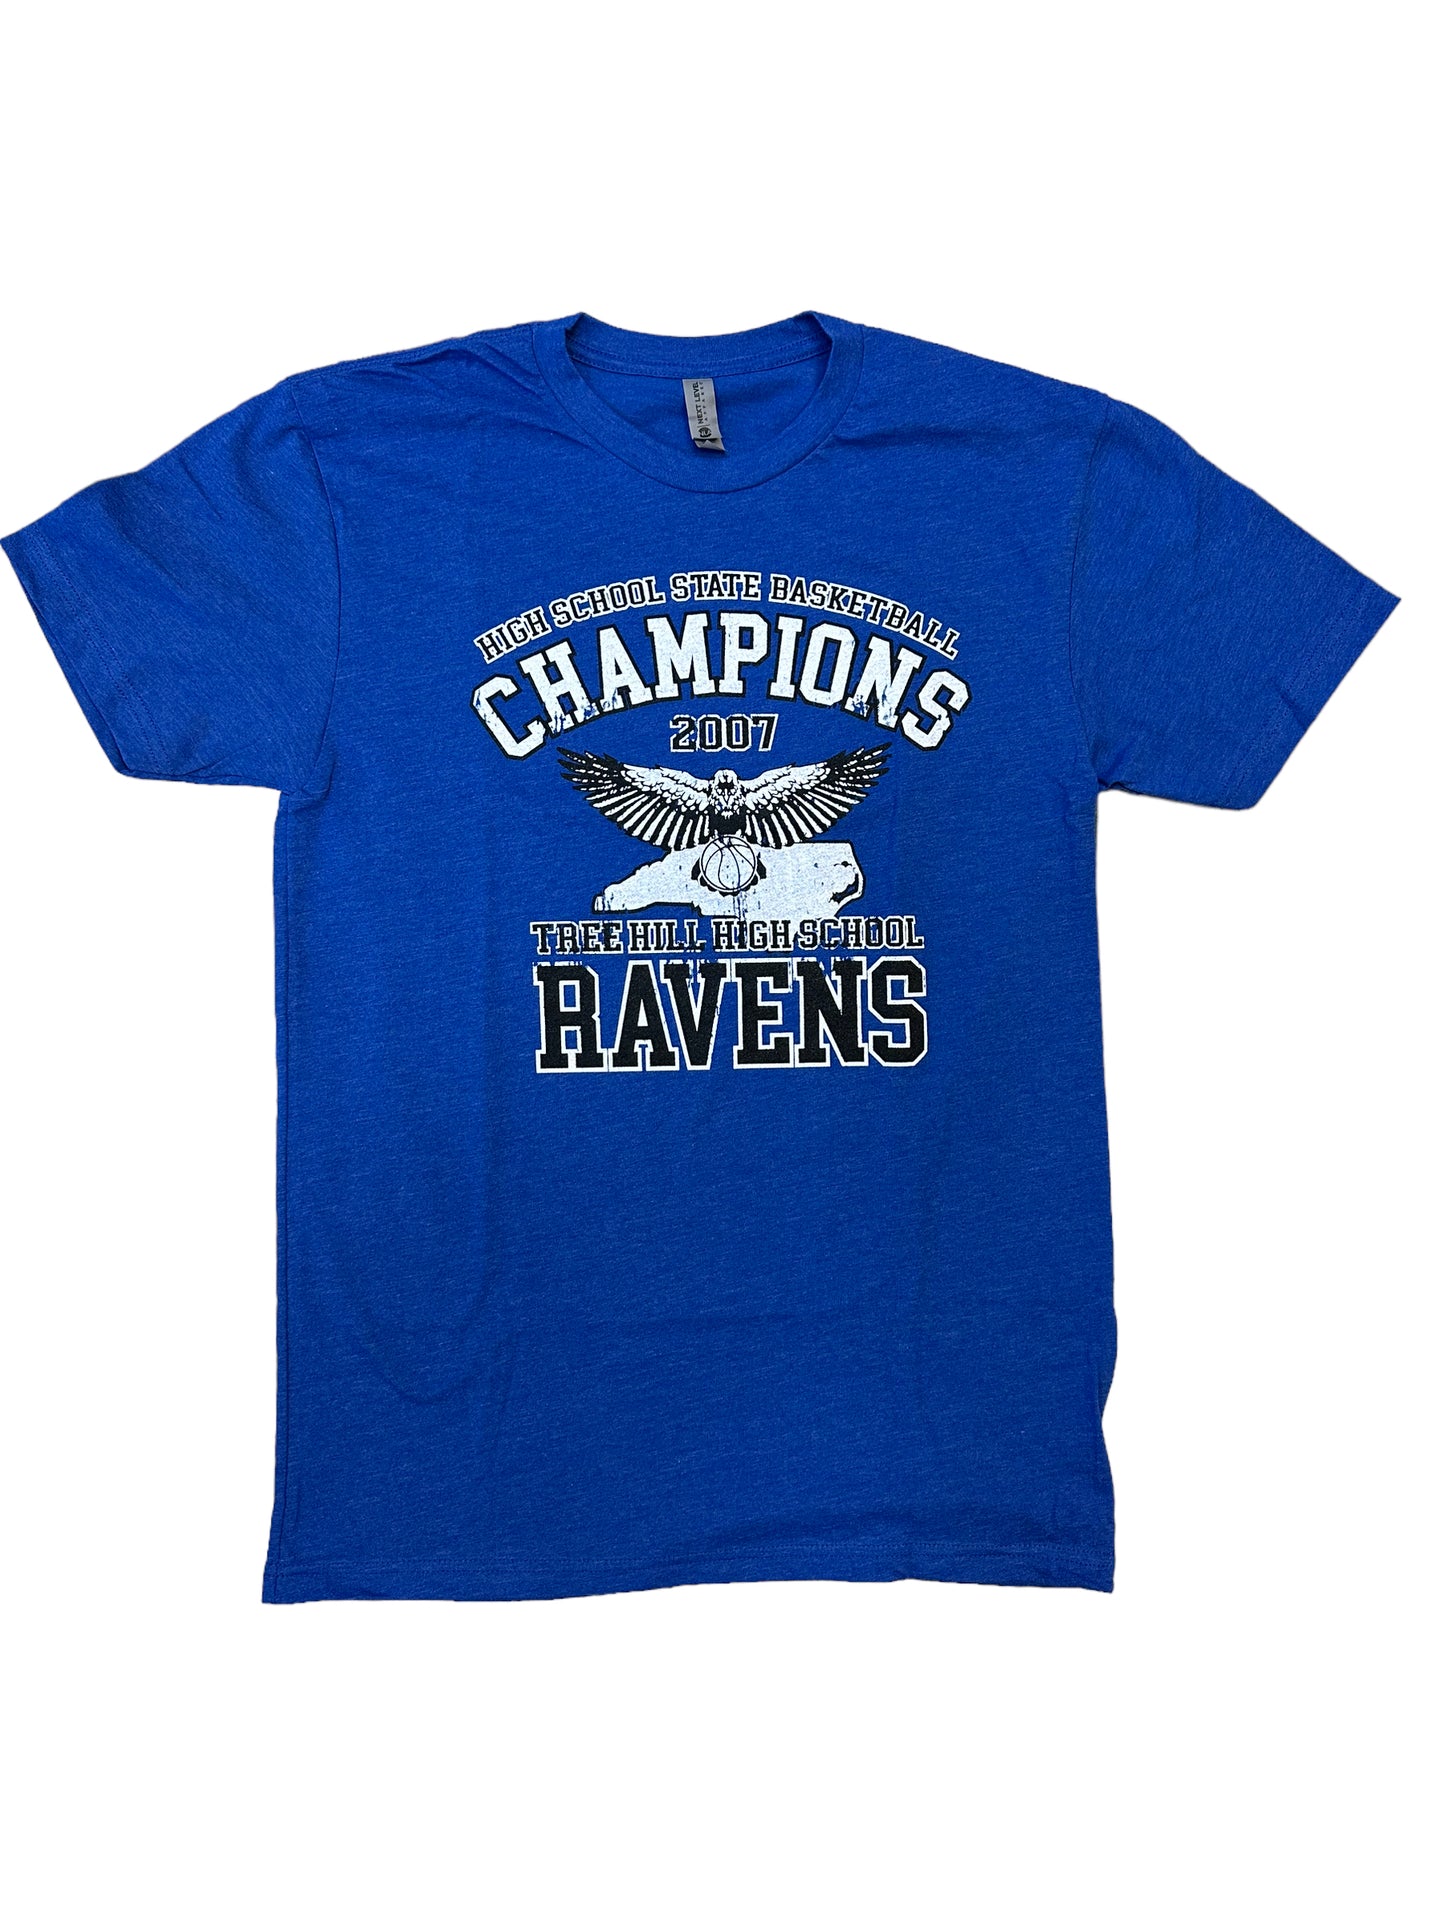 Tree Hill Ravens High school Champions One tree Hill – T Shirt – Royal